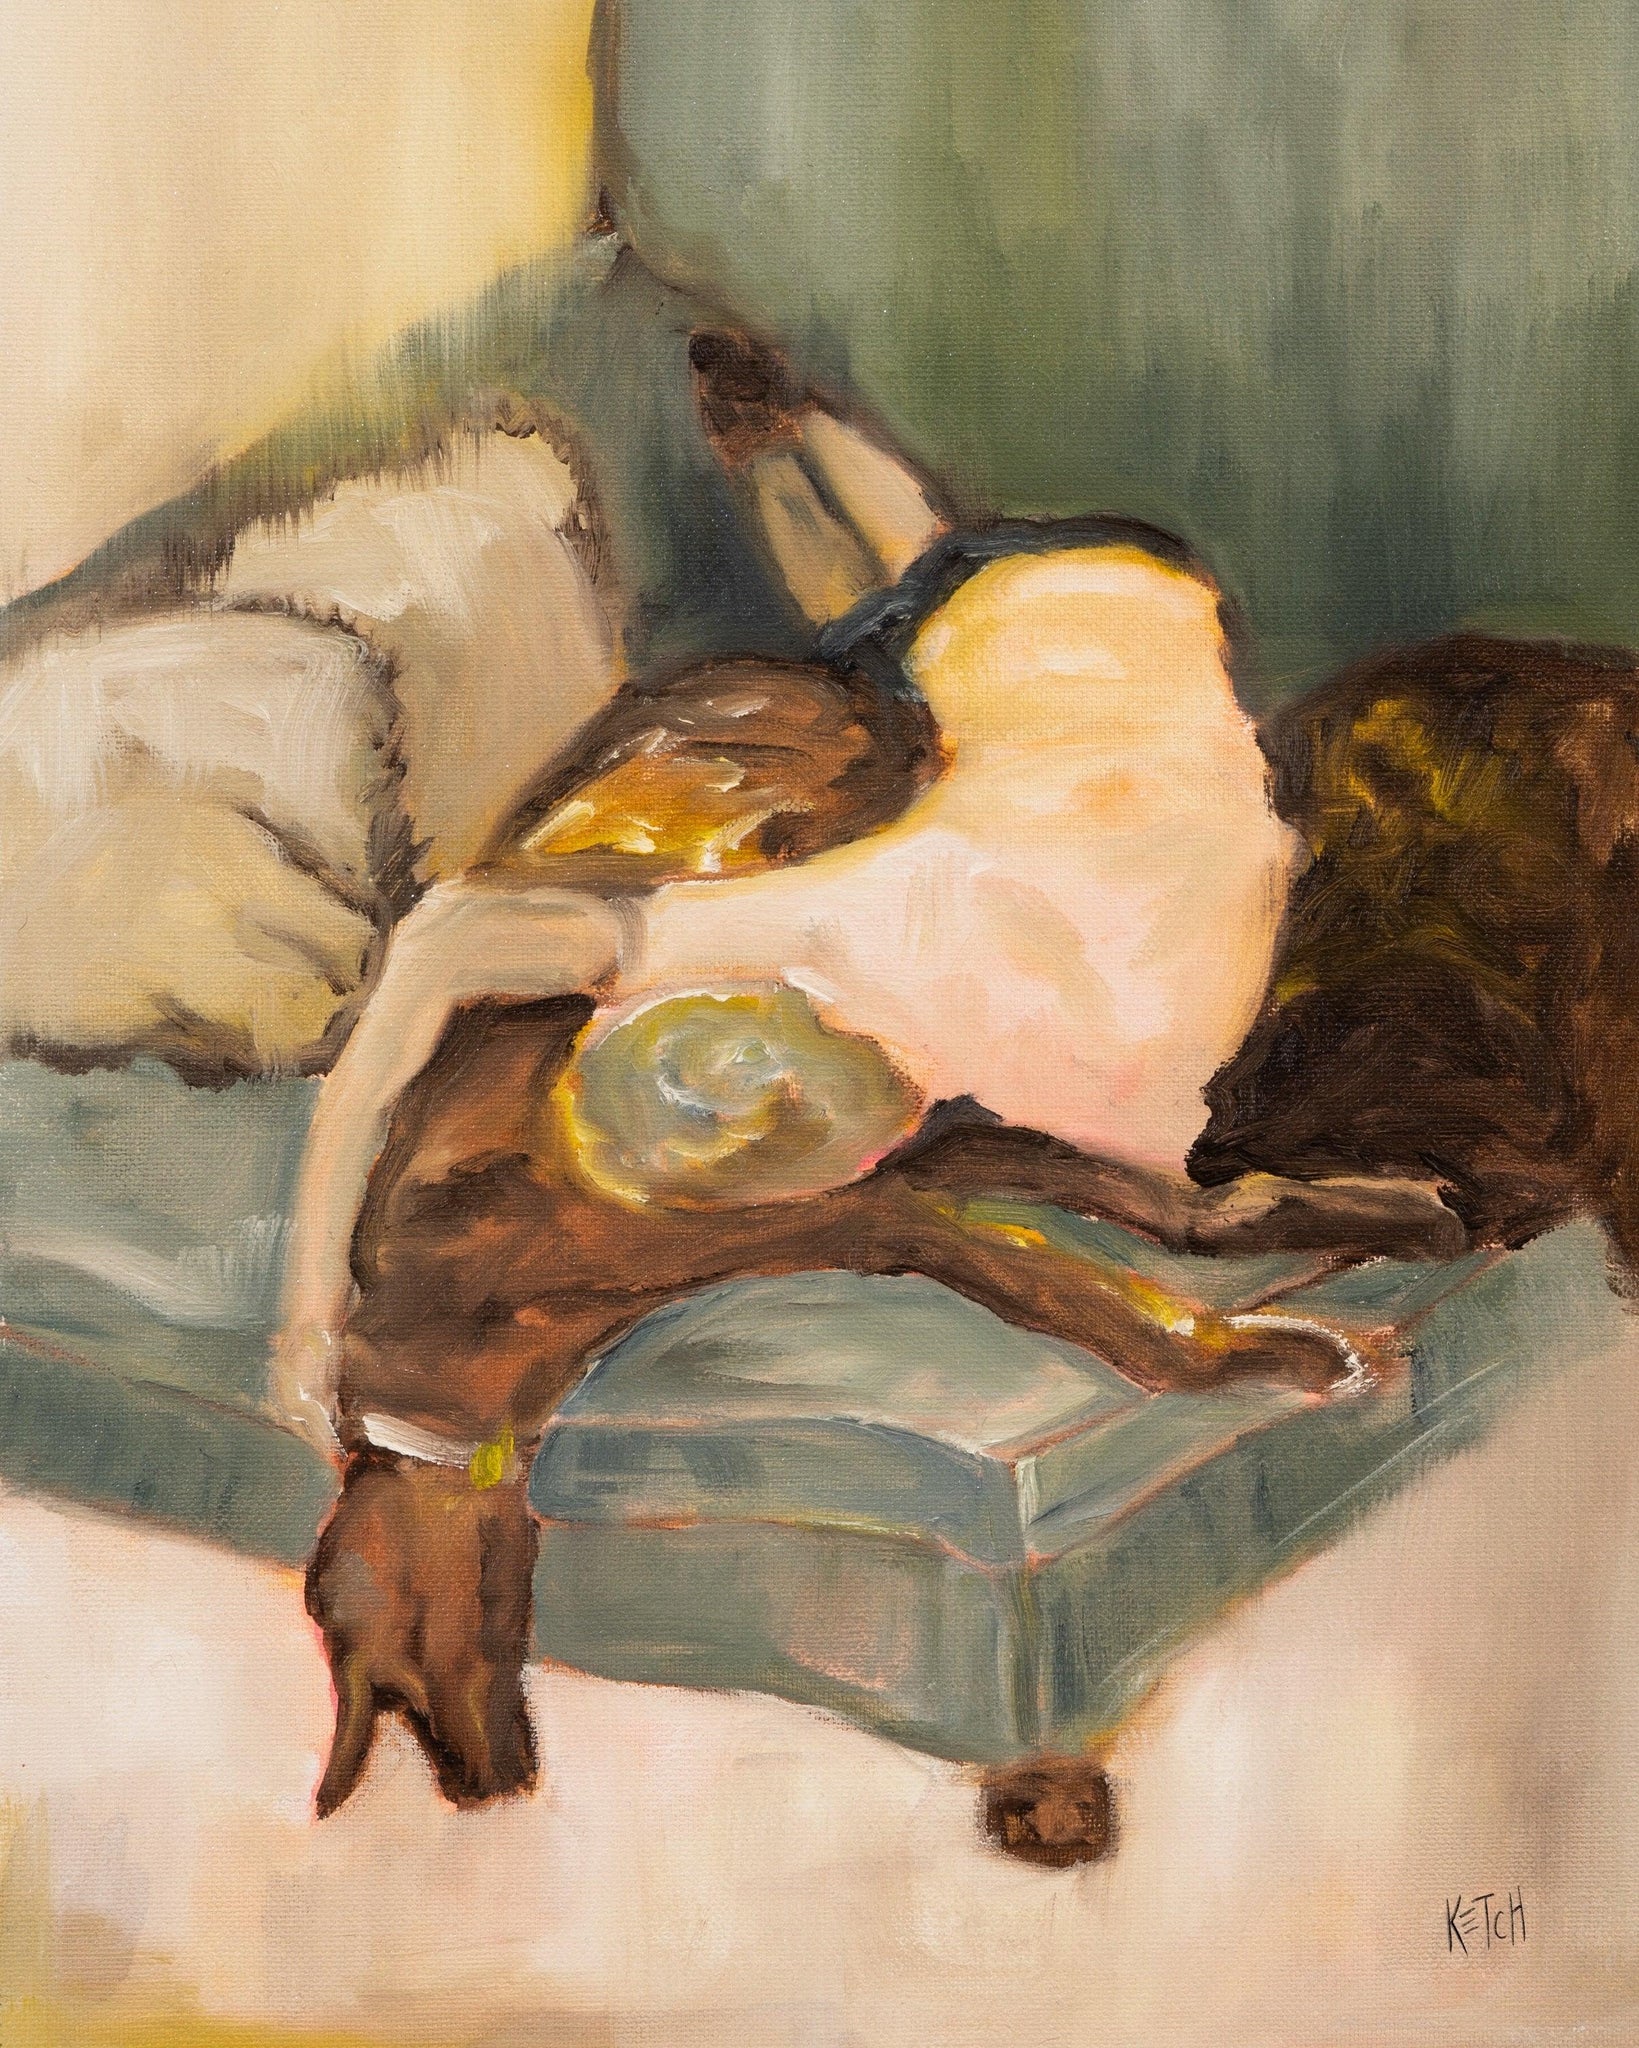 "A Soft Place to Fall" Print - Mary James Ketch Studio